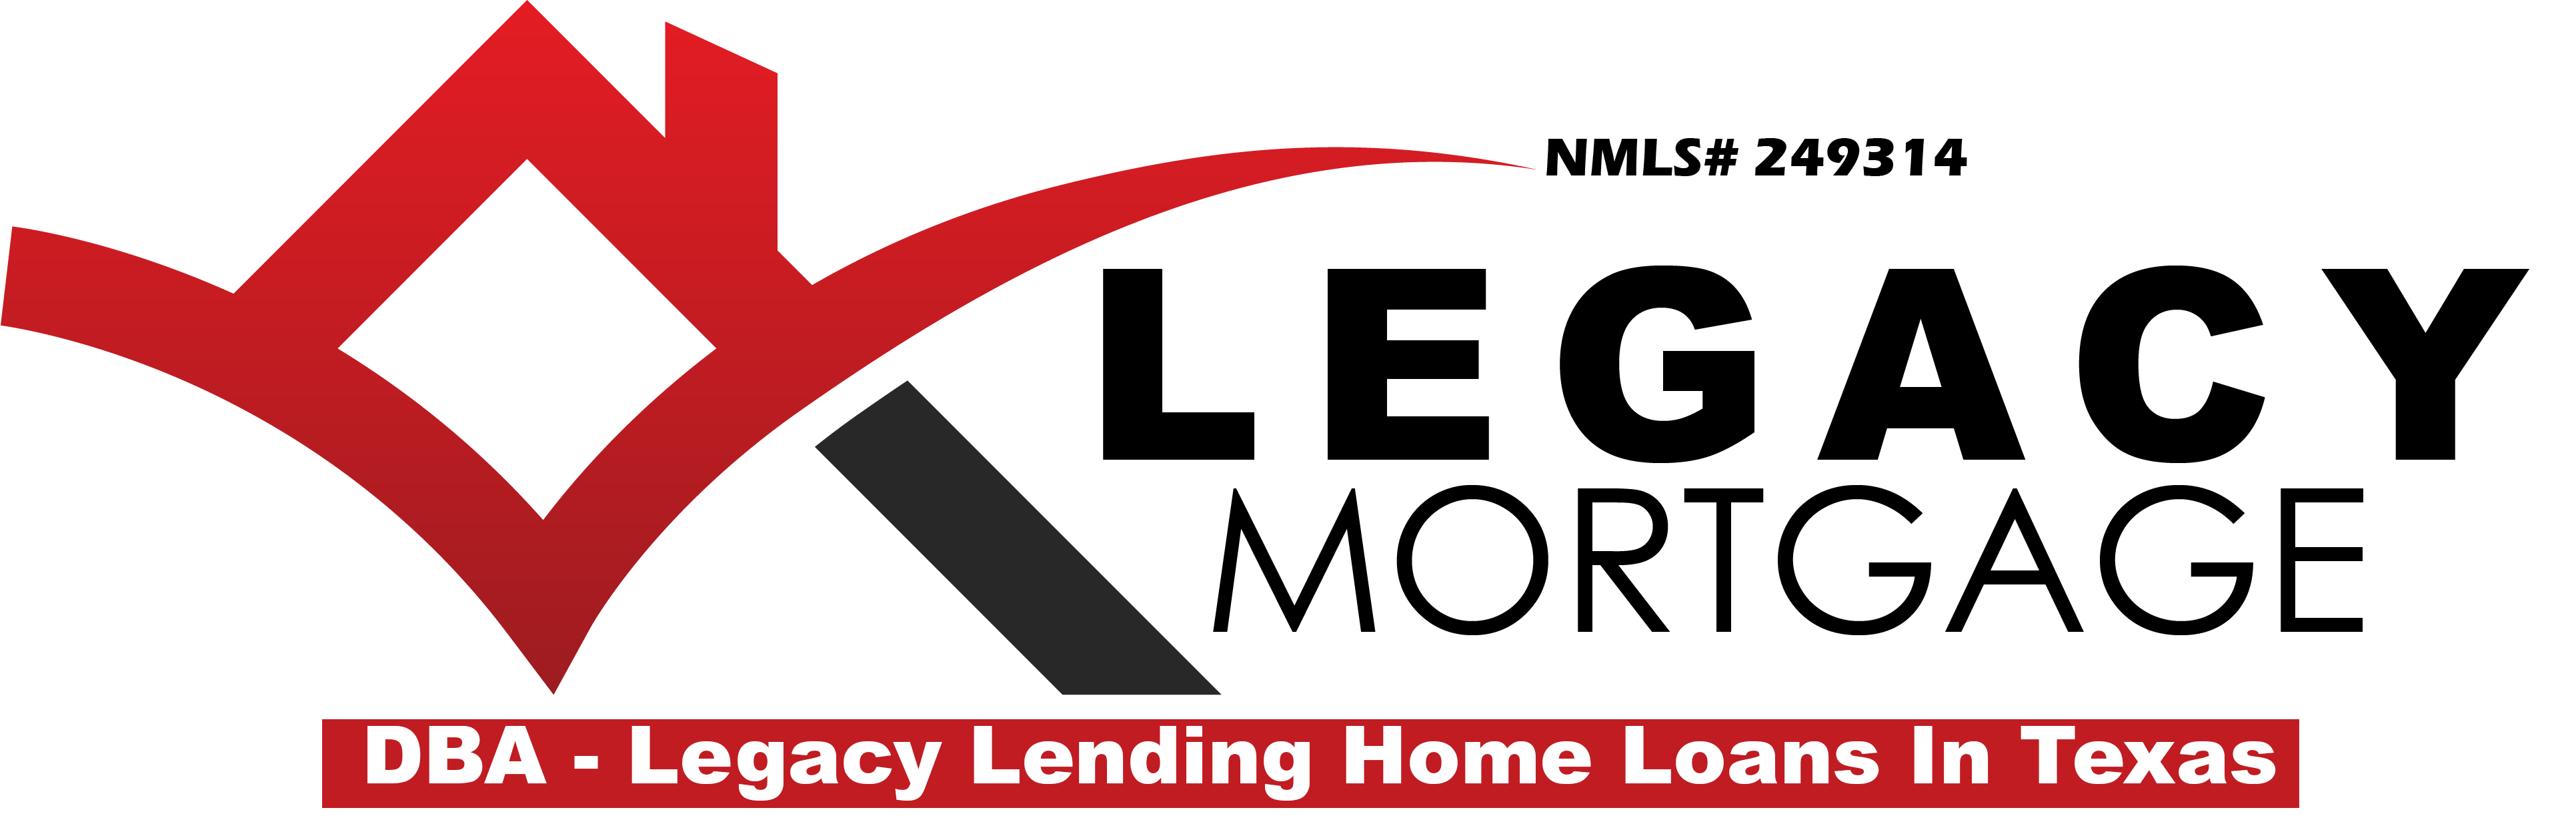 Legacy-Mortgage-website-Logo-2